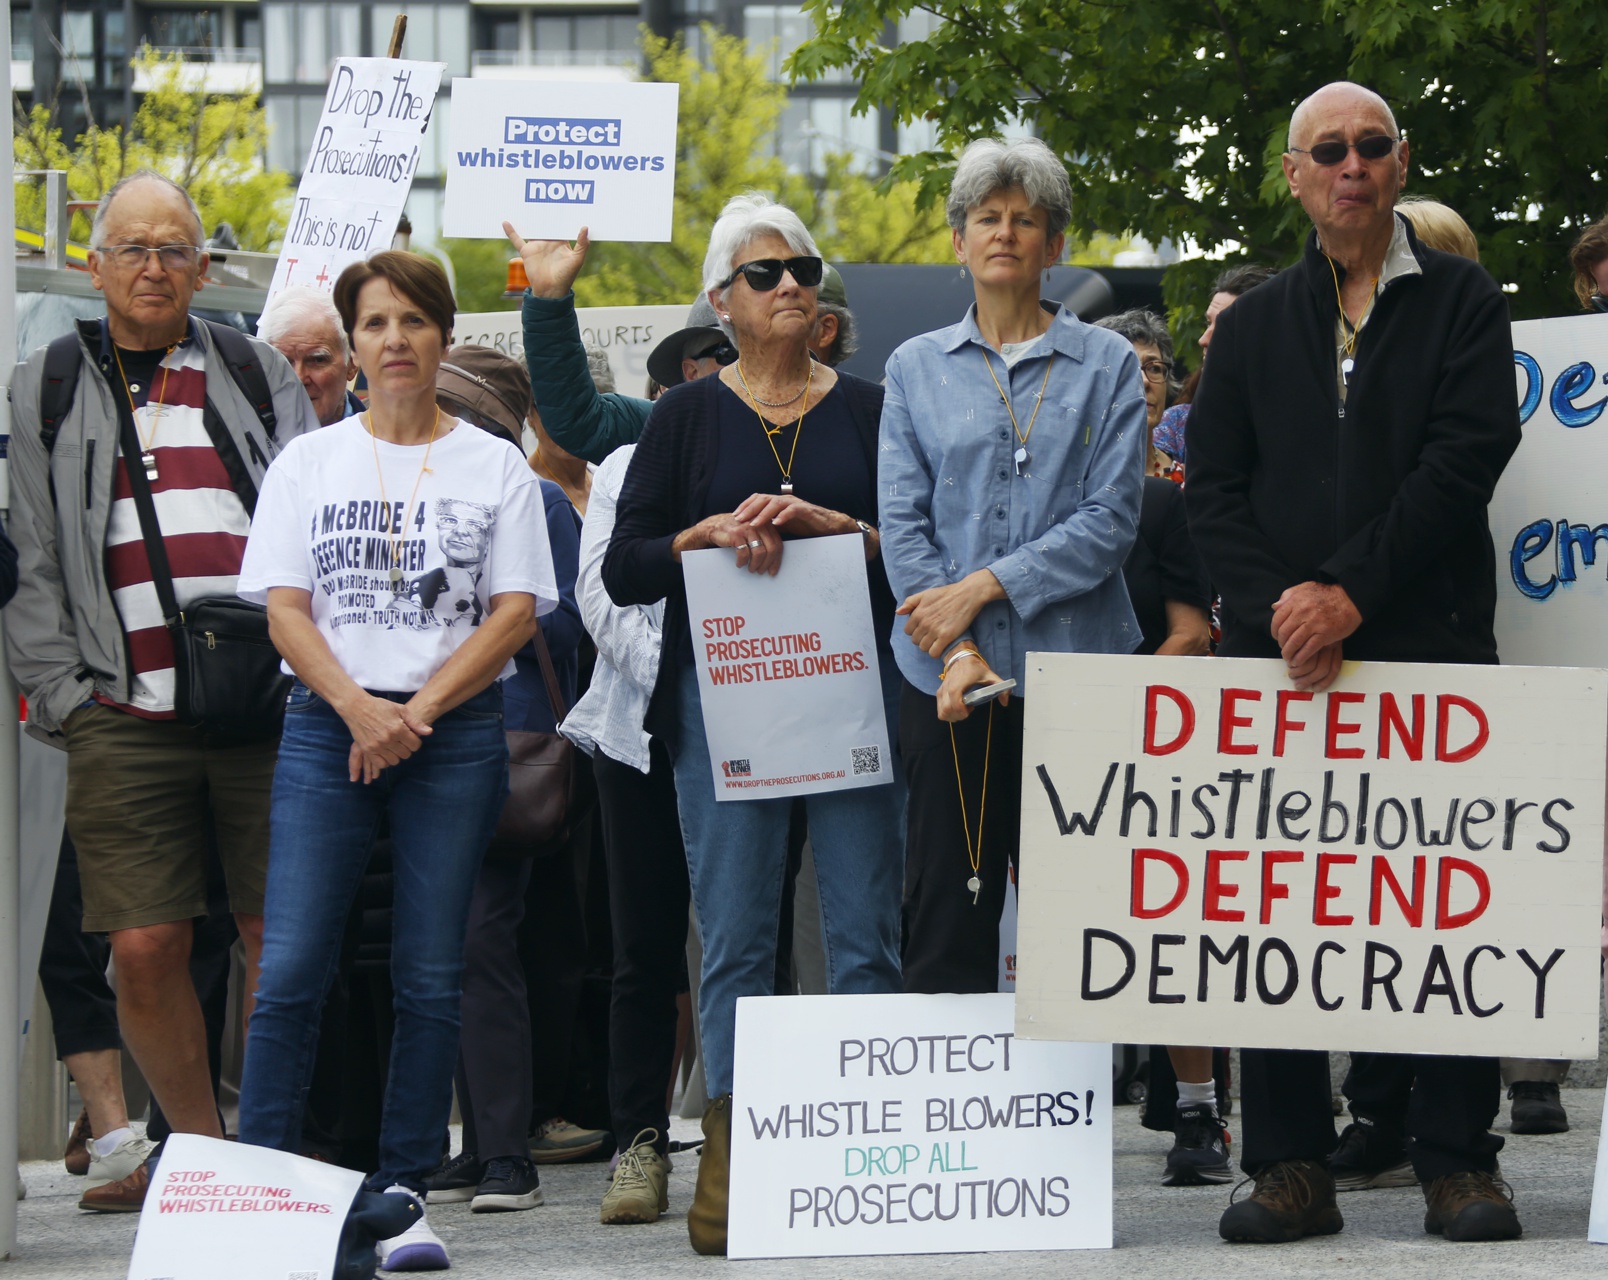 Defend whistleblowers, November 13